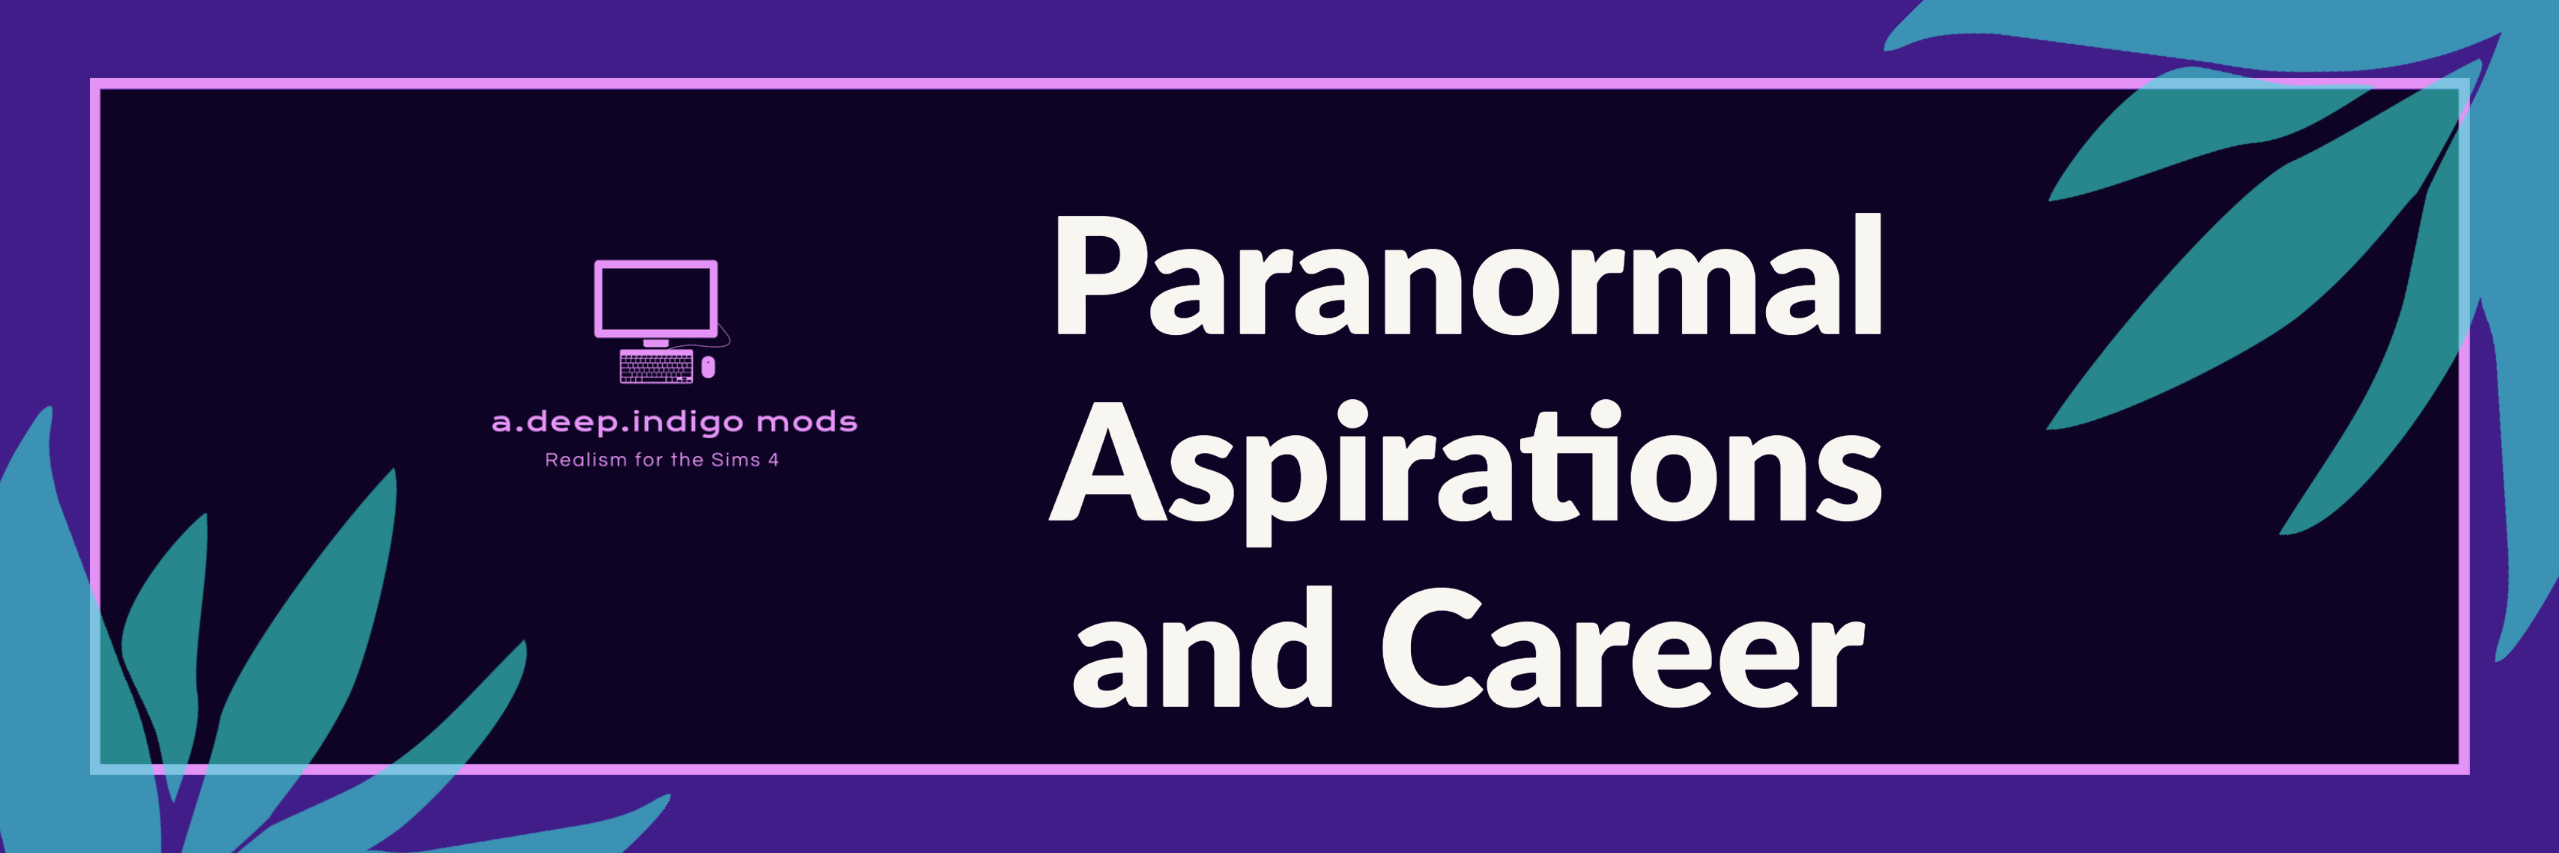 Paranormal Career and Aspirations